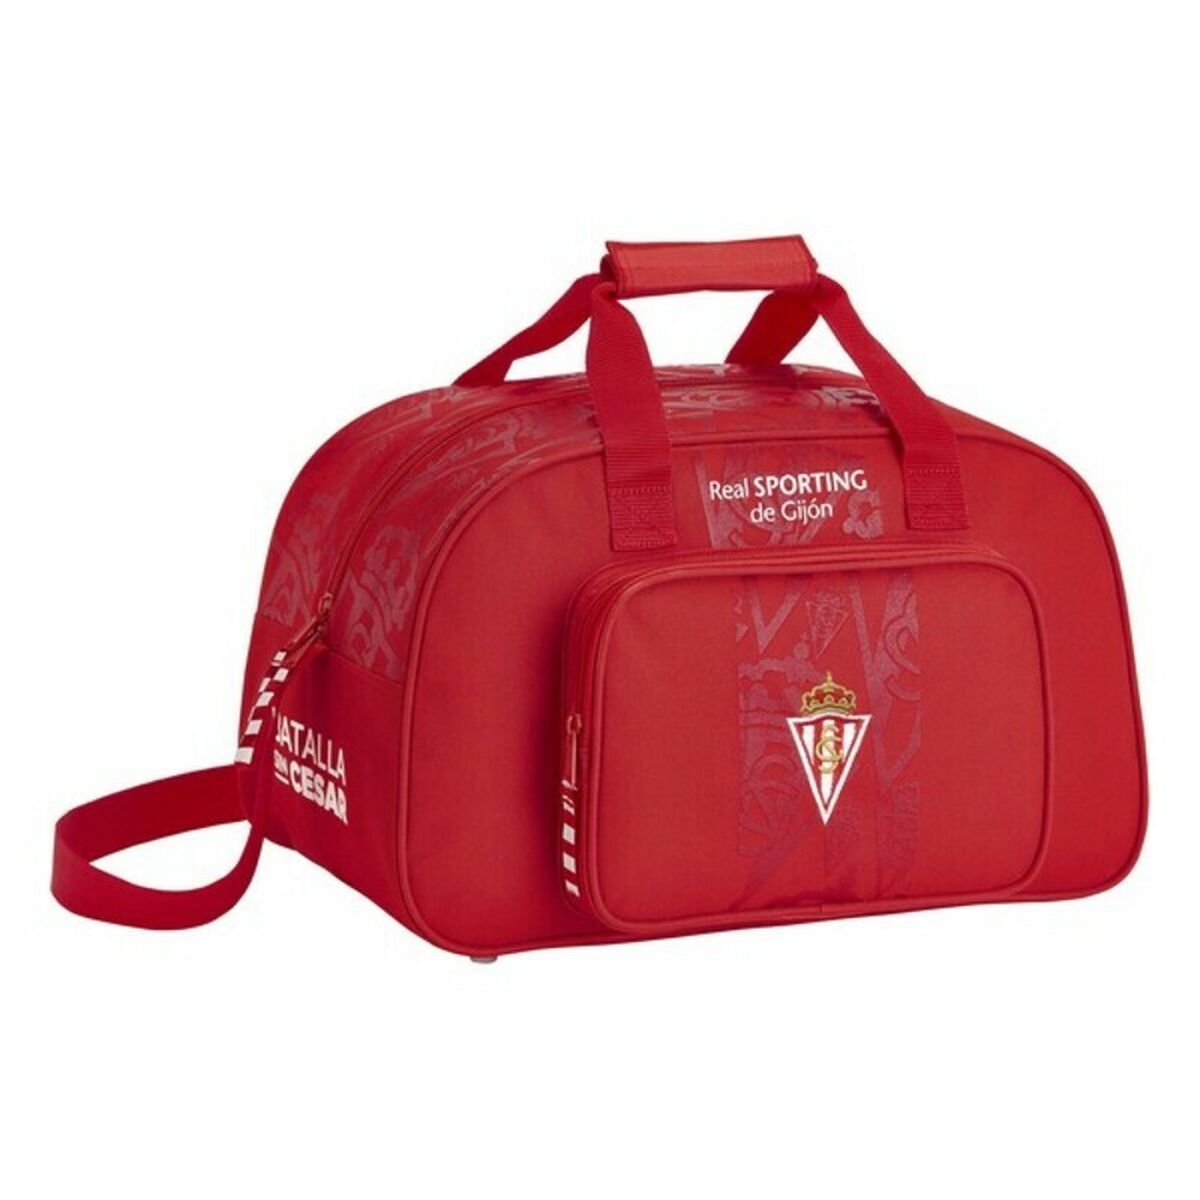 Sports bag Real Sporting de Gijón Red (40 x 24 x 23 cm)